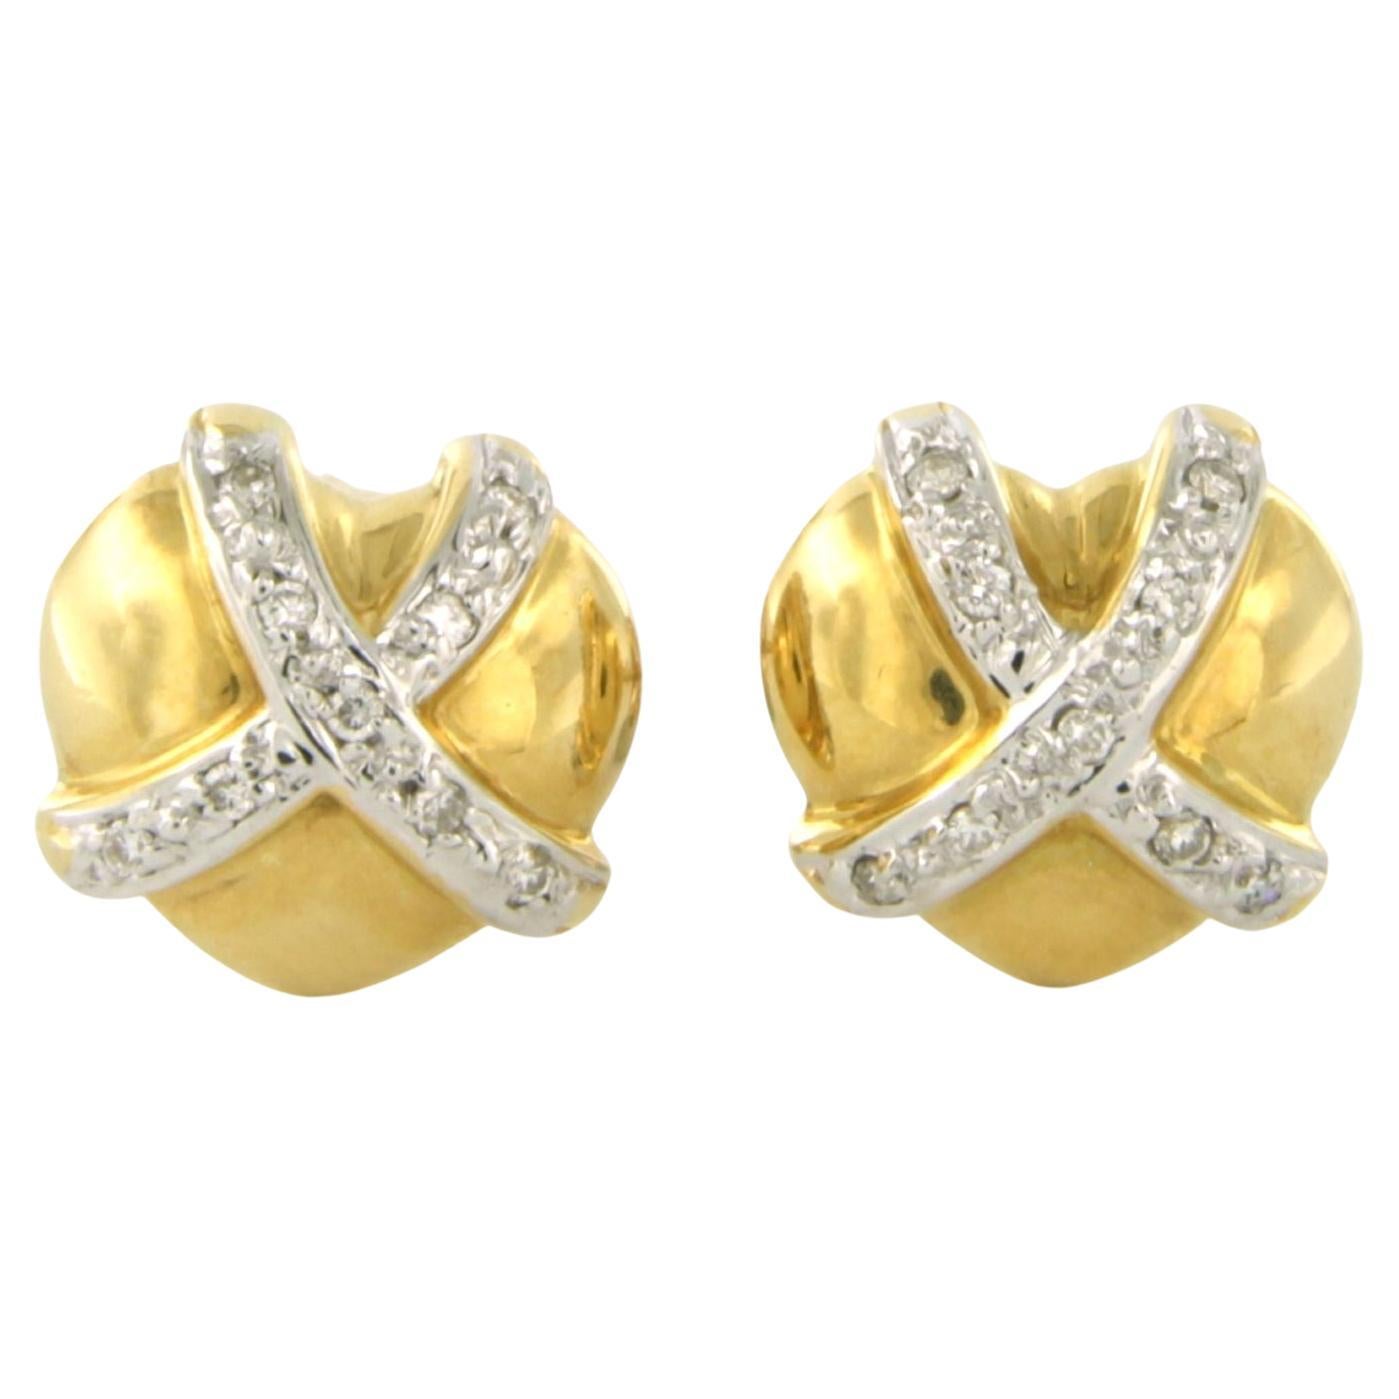 Earrings studs set with diamonds 18k bicolour gold